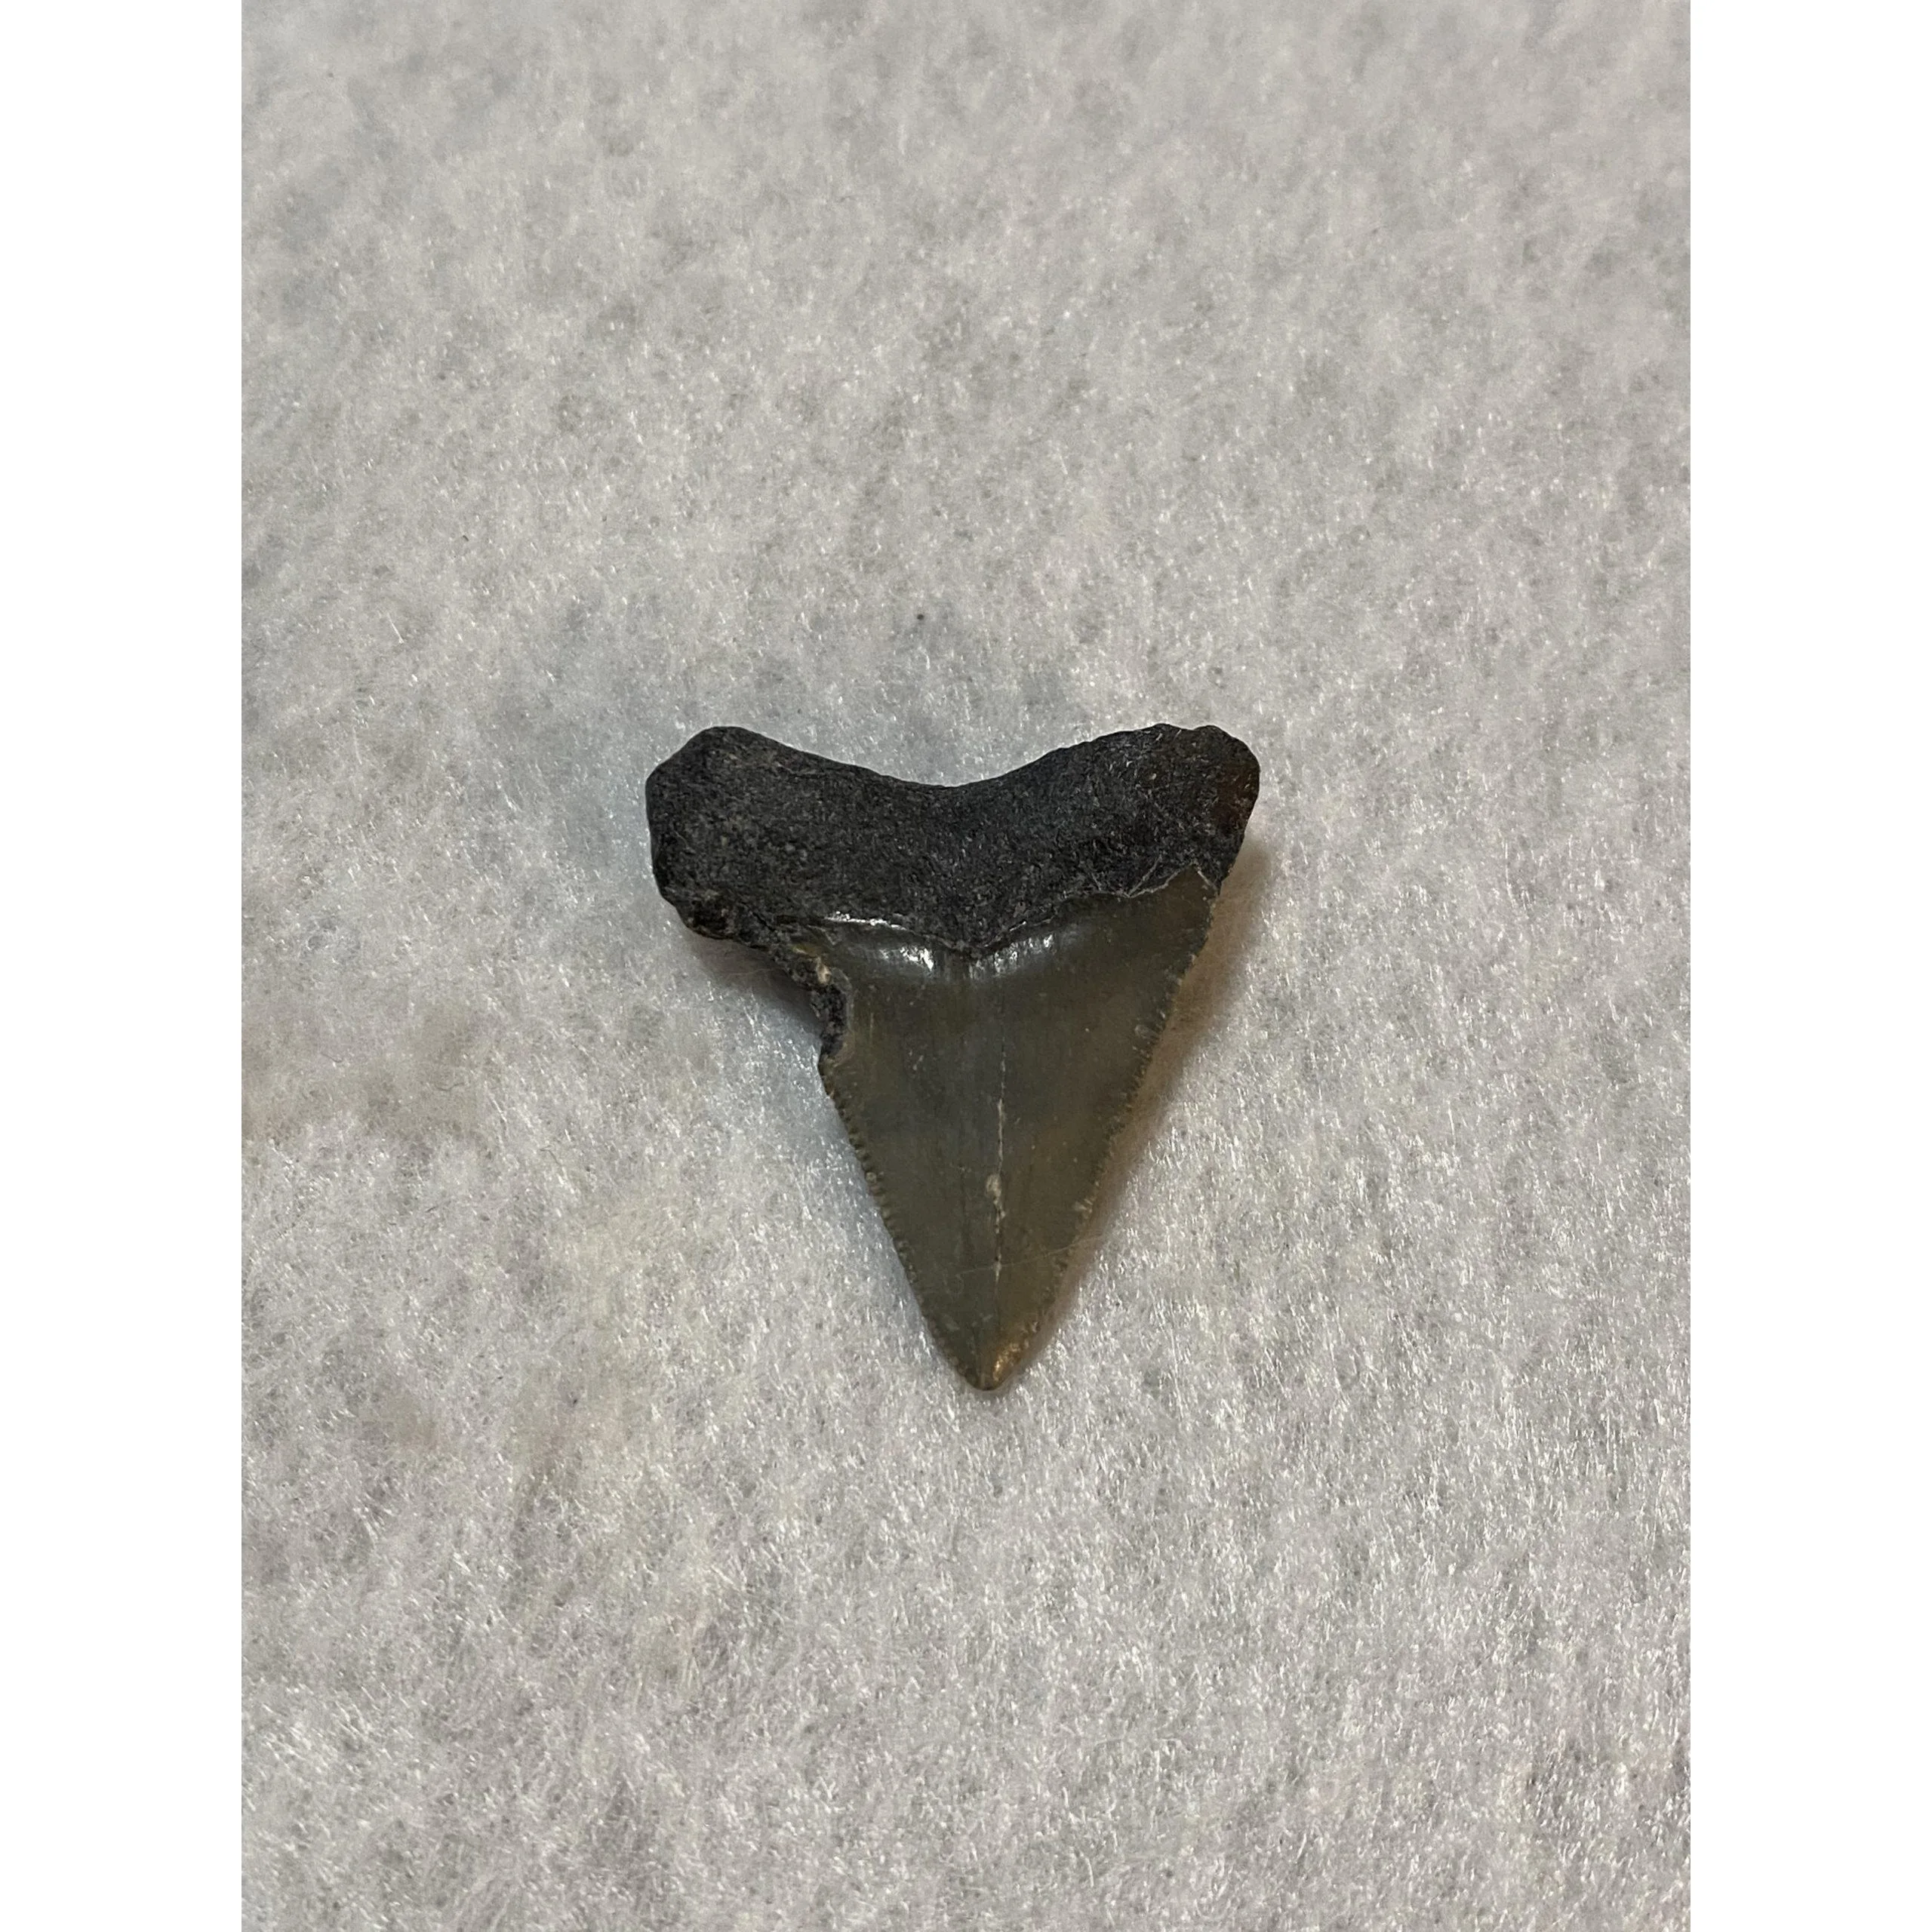 Megalodon Tooth  Bone Valley, Florida 1.10 inch Prehistoric Online